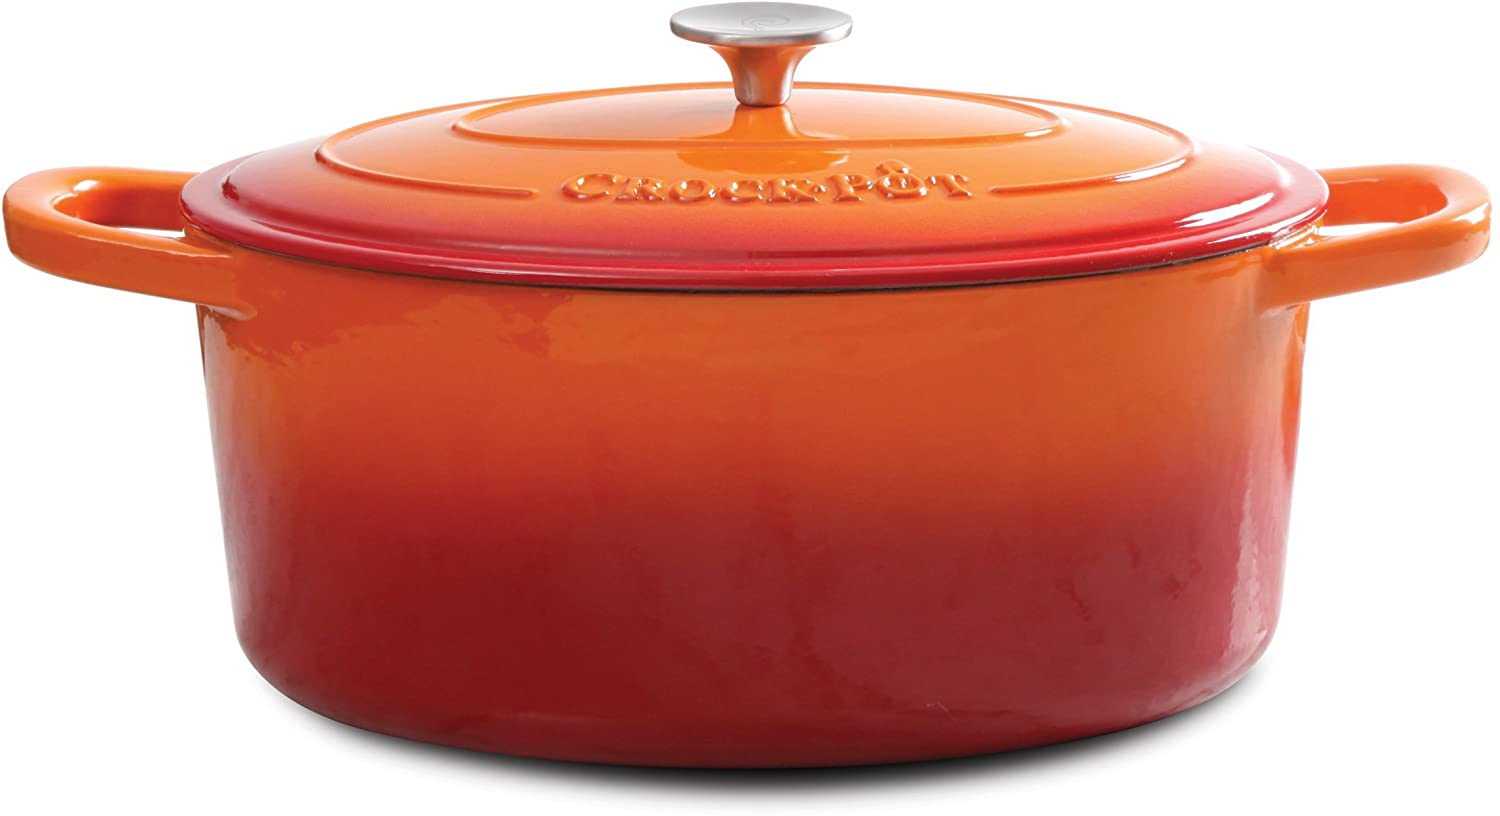 Crock Pot Artisan 7 Quart Enameled Cast Iron Dutch Oven, Sunset Orange, 1 -  Foods Co.